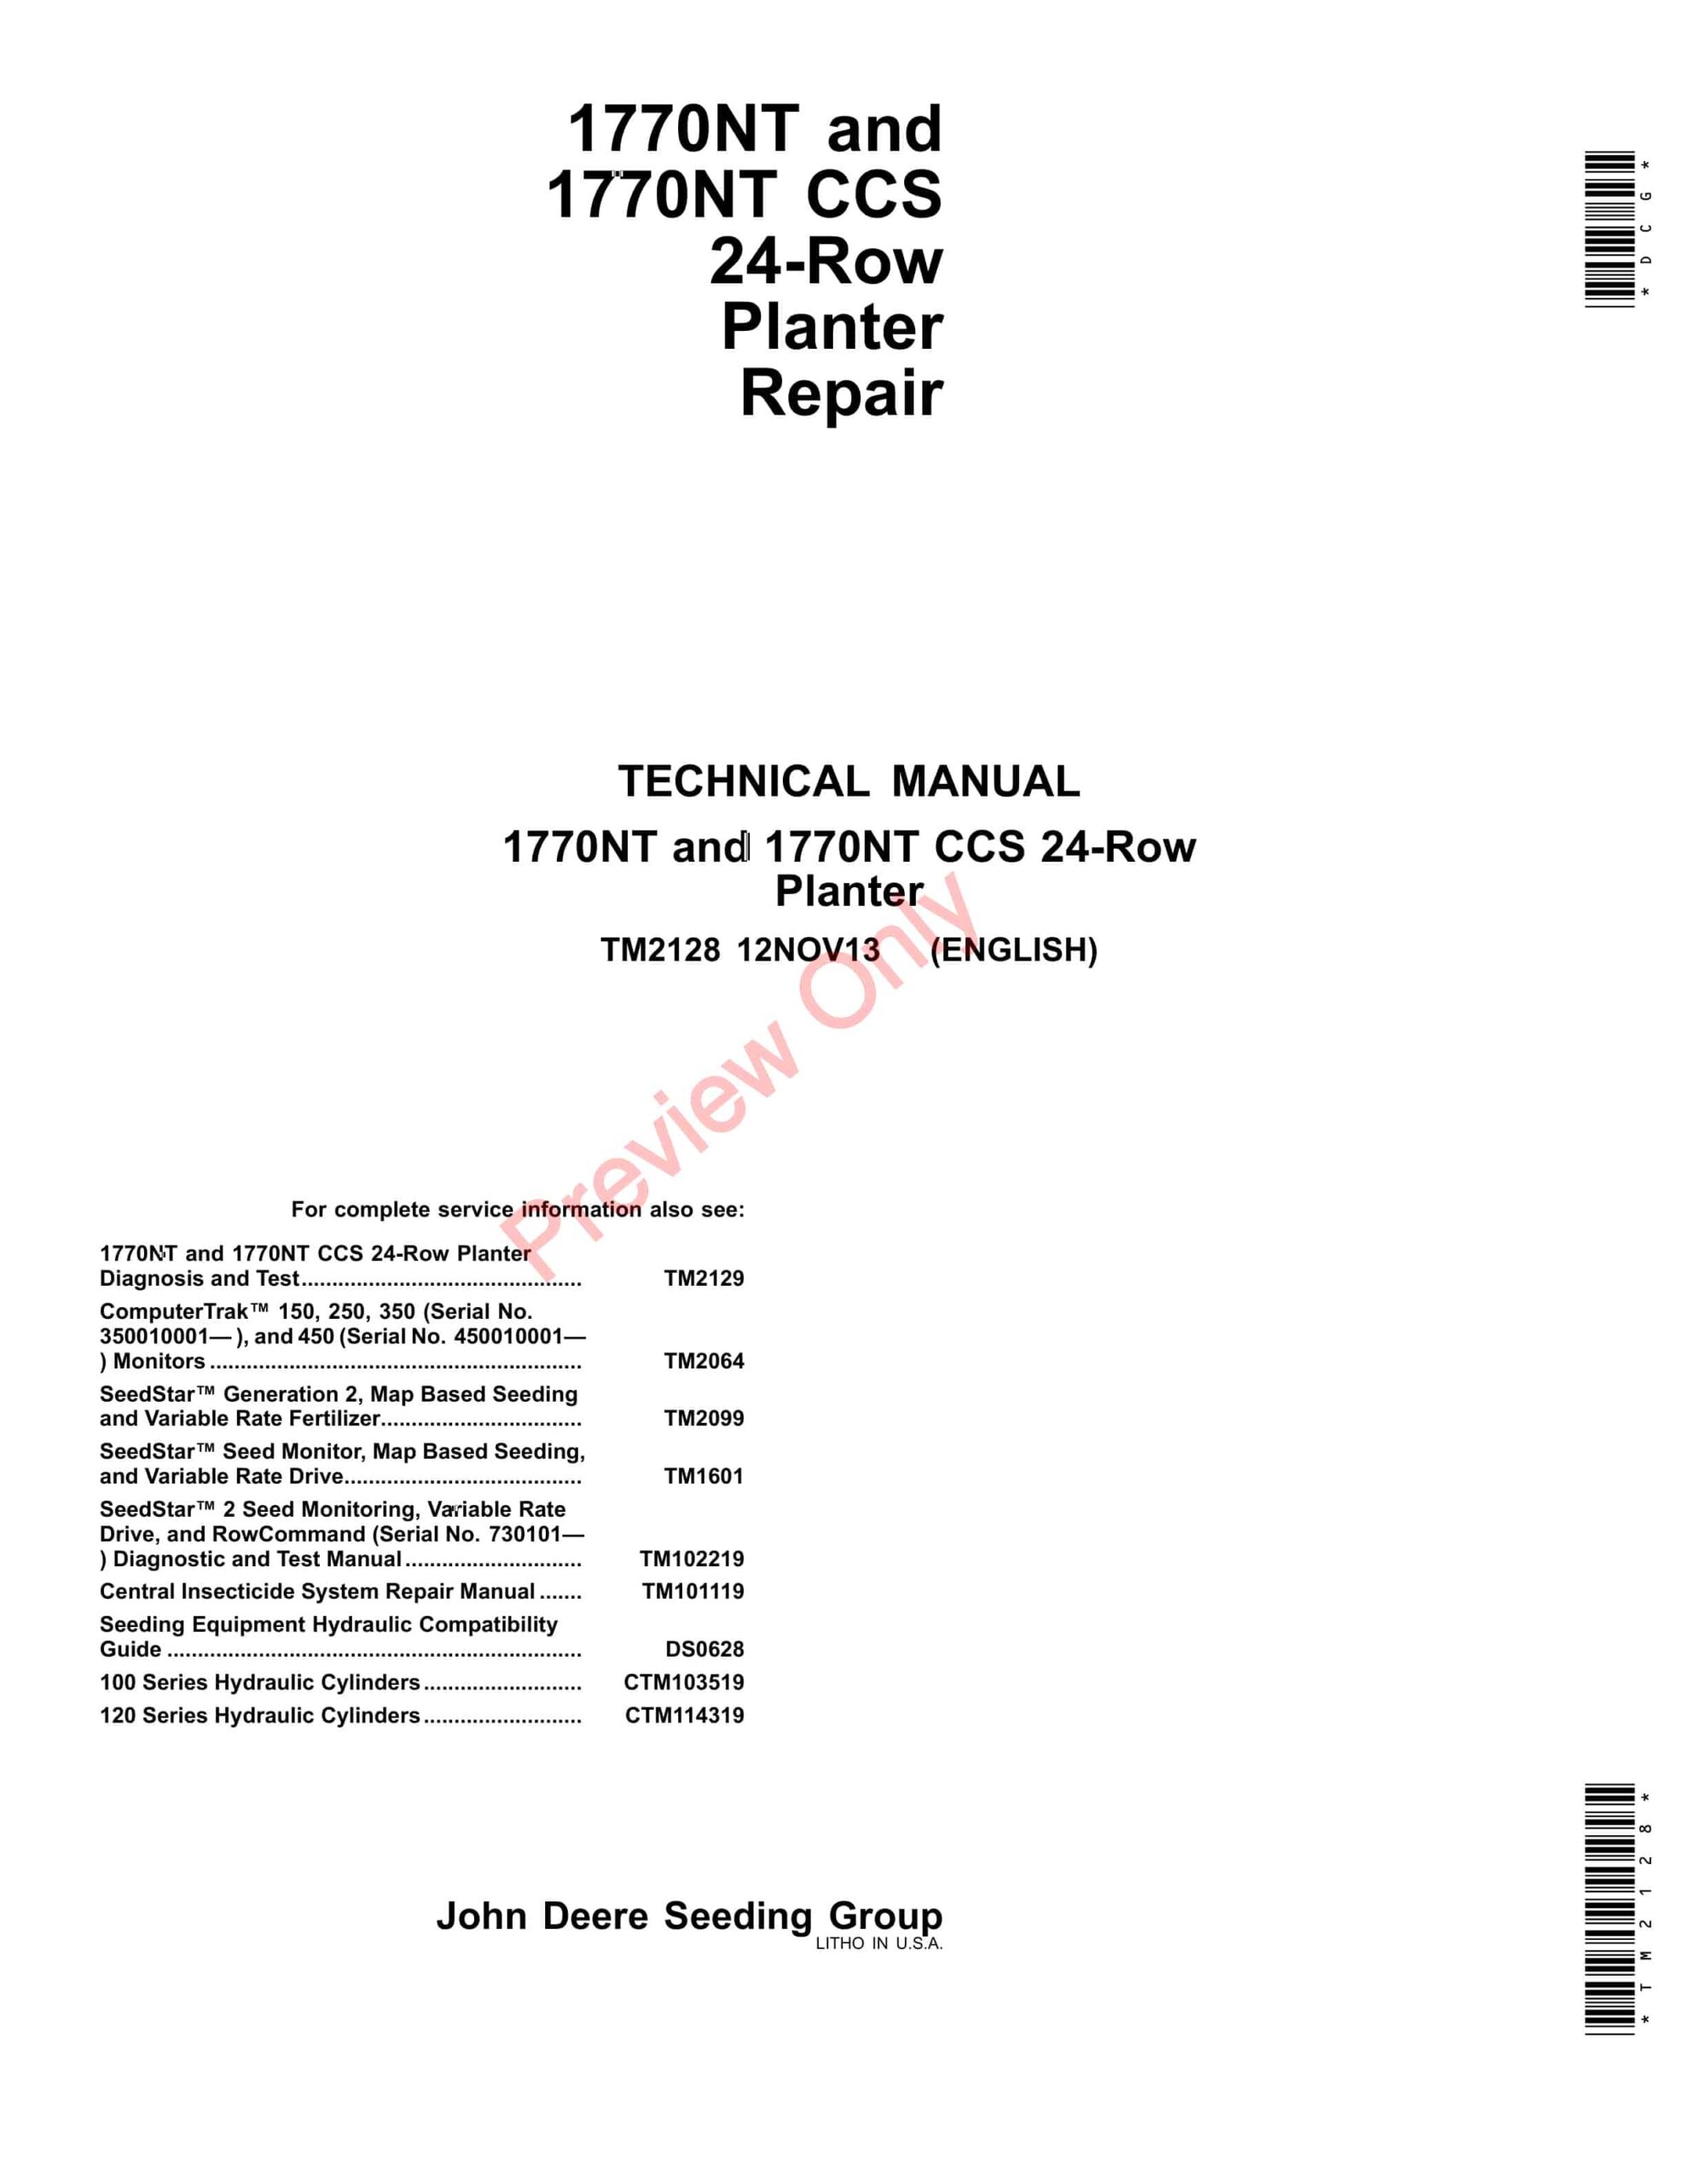 John Deere 1770NT, 1770NT CCS Drawn (24RN) Planters Technical Manual TM2128 12NOV13-1